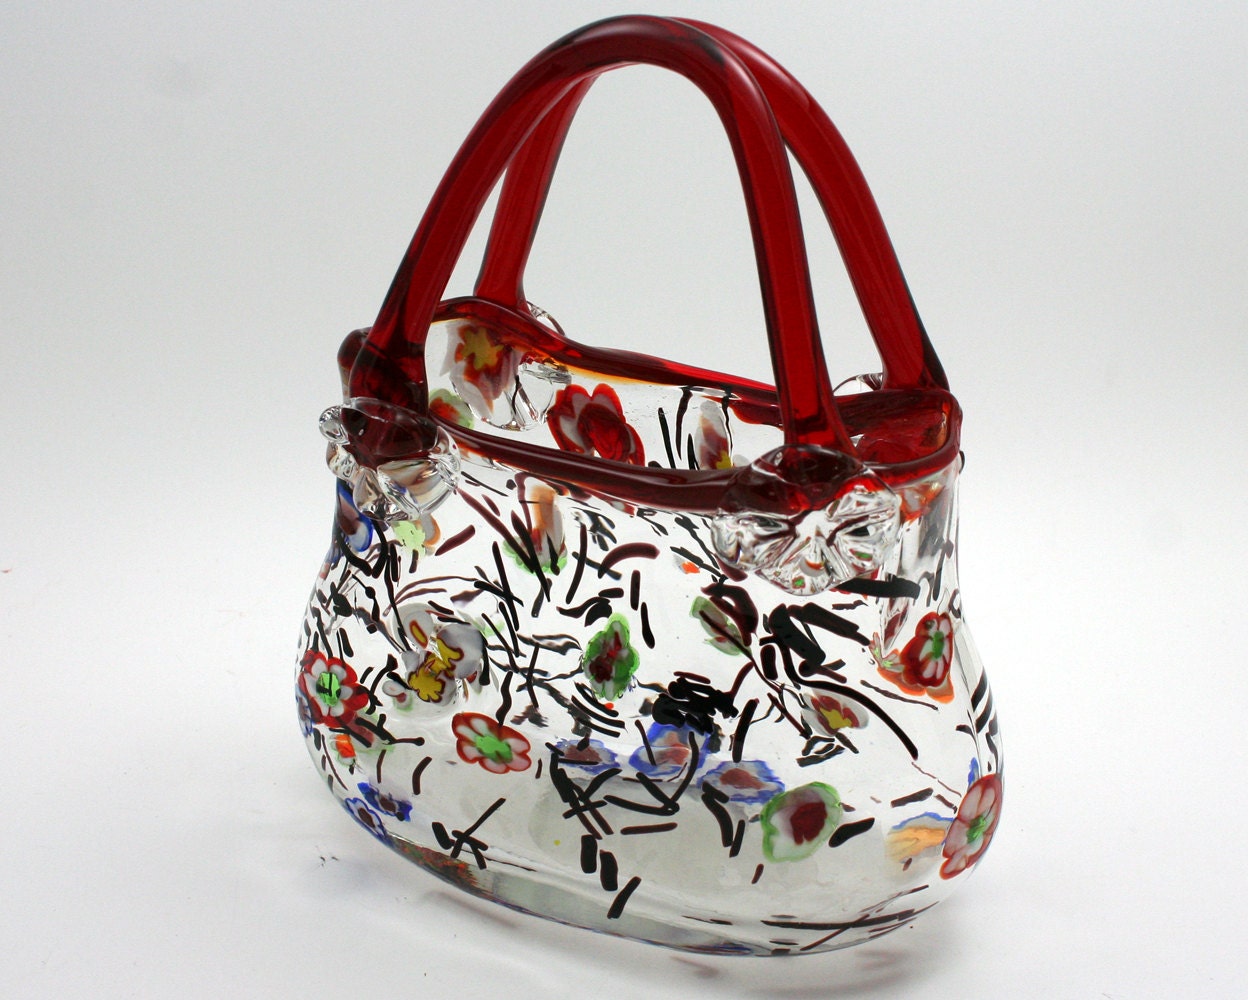 Vintage Murano glass purse red handles bright millefiore